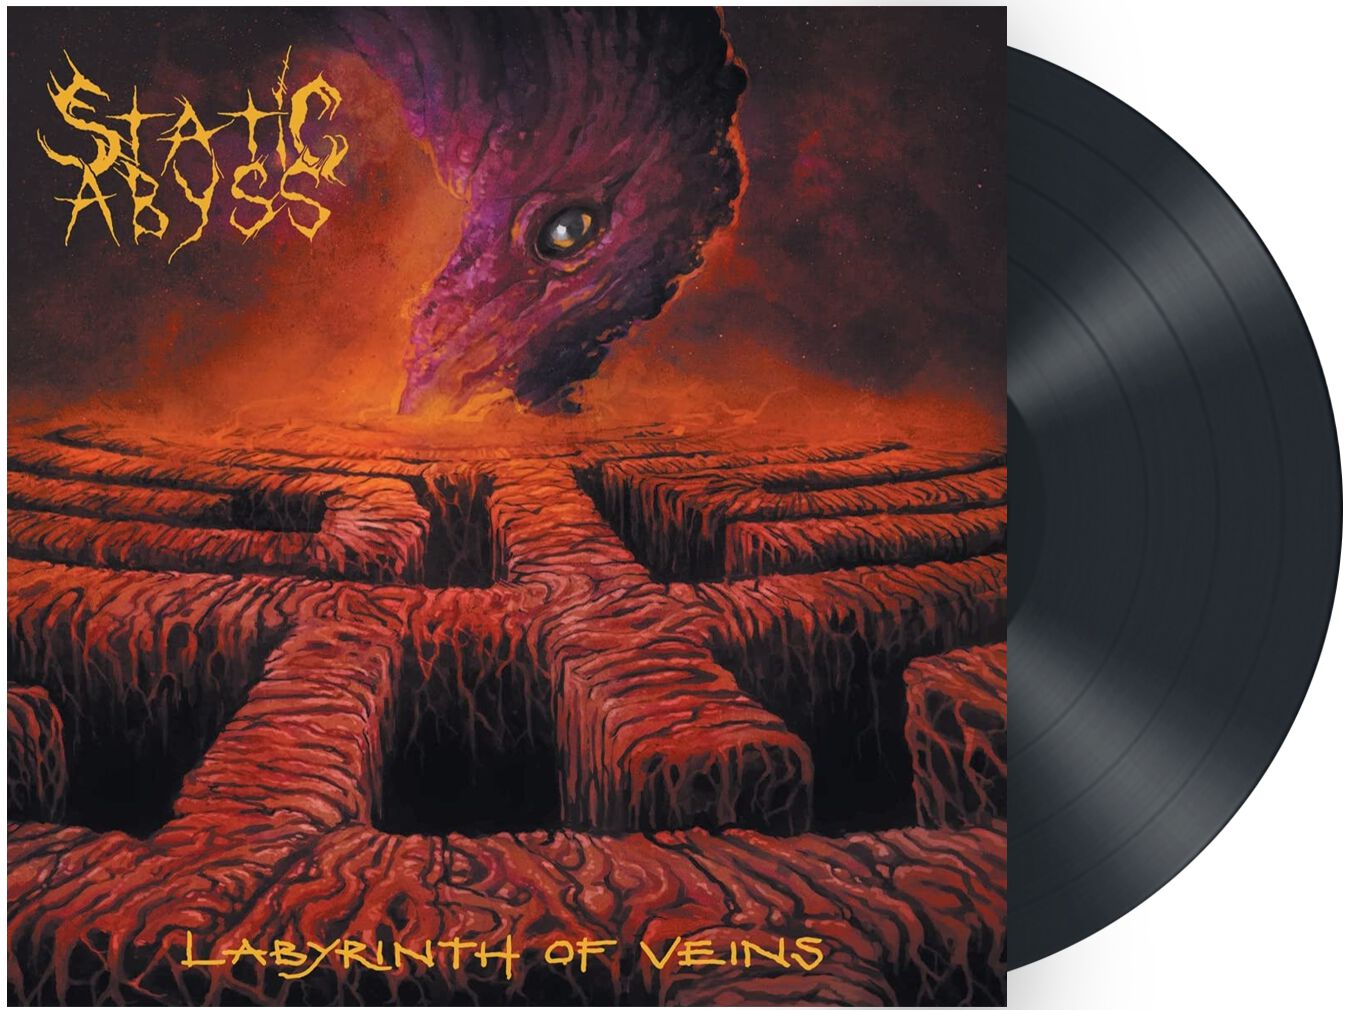 Static Abyss Labyrinth of veins LP black